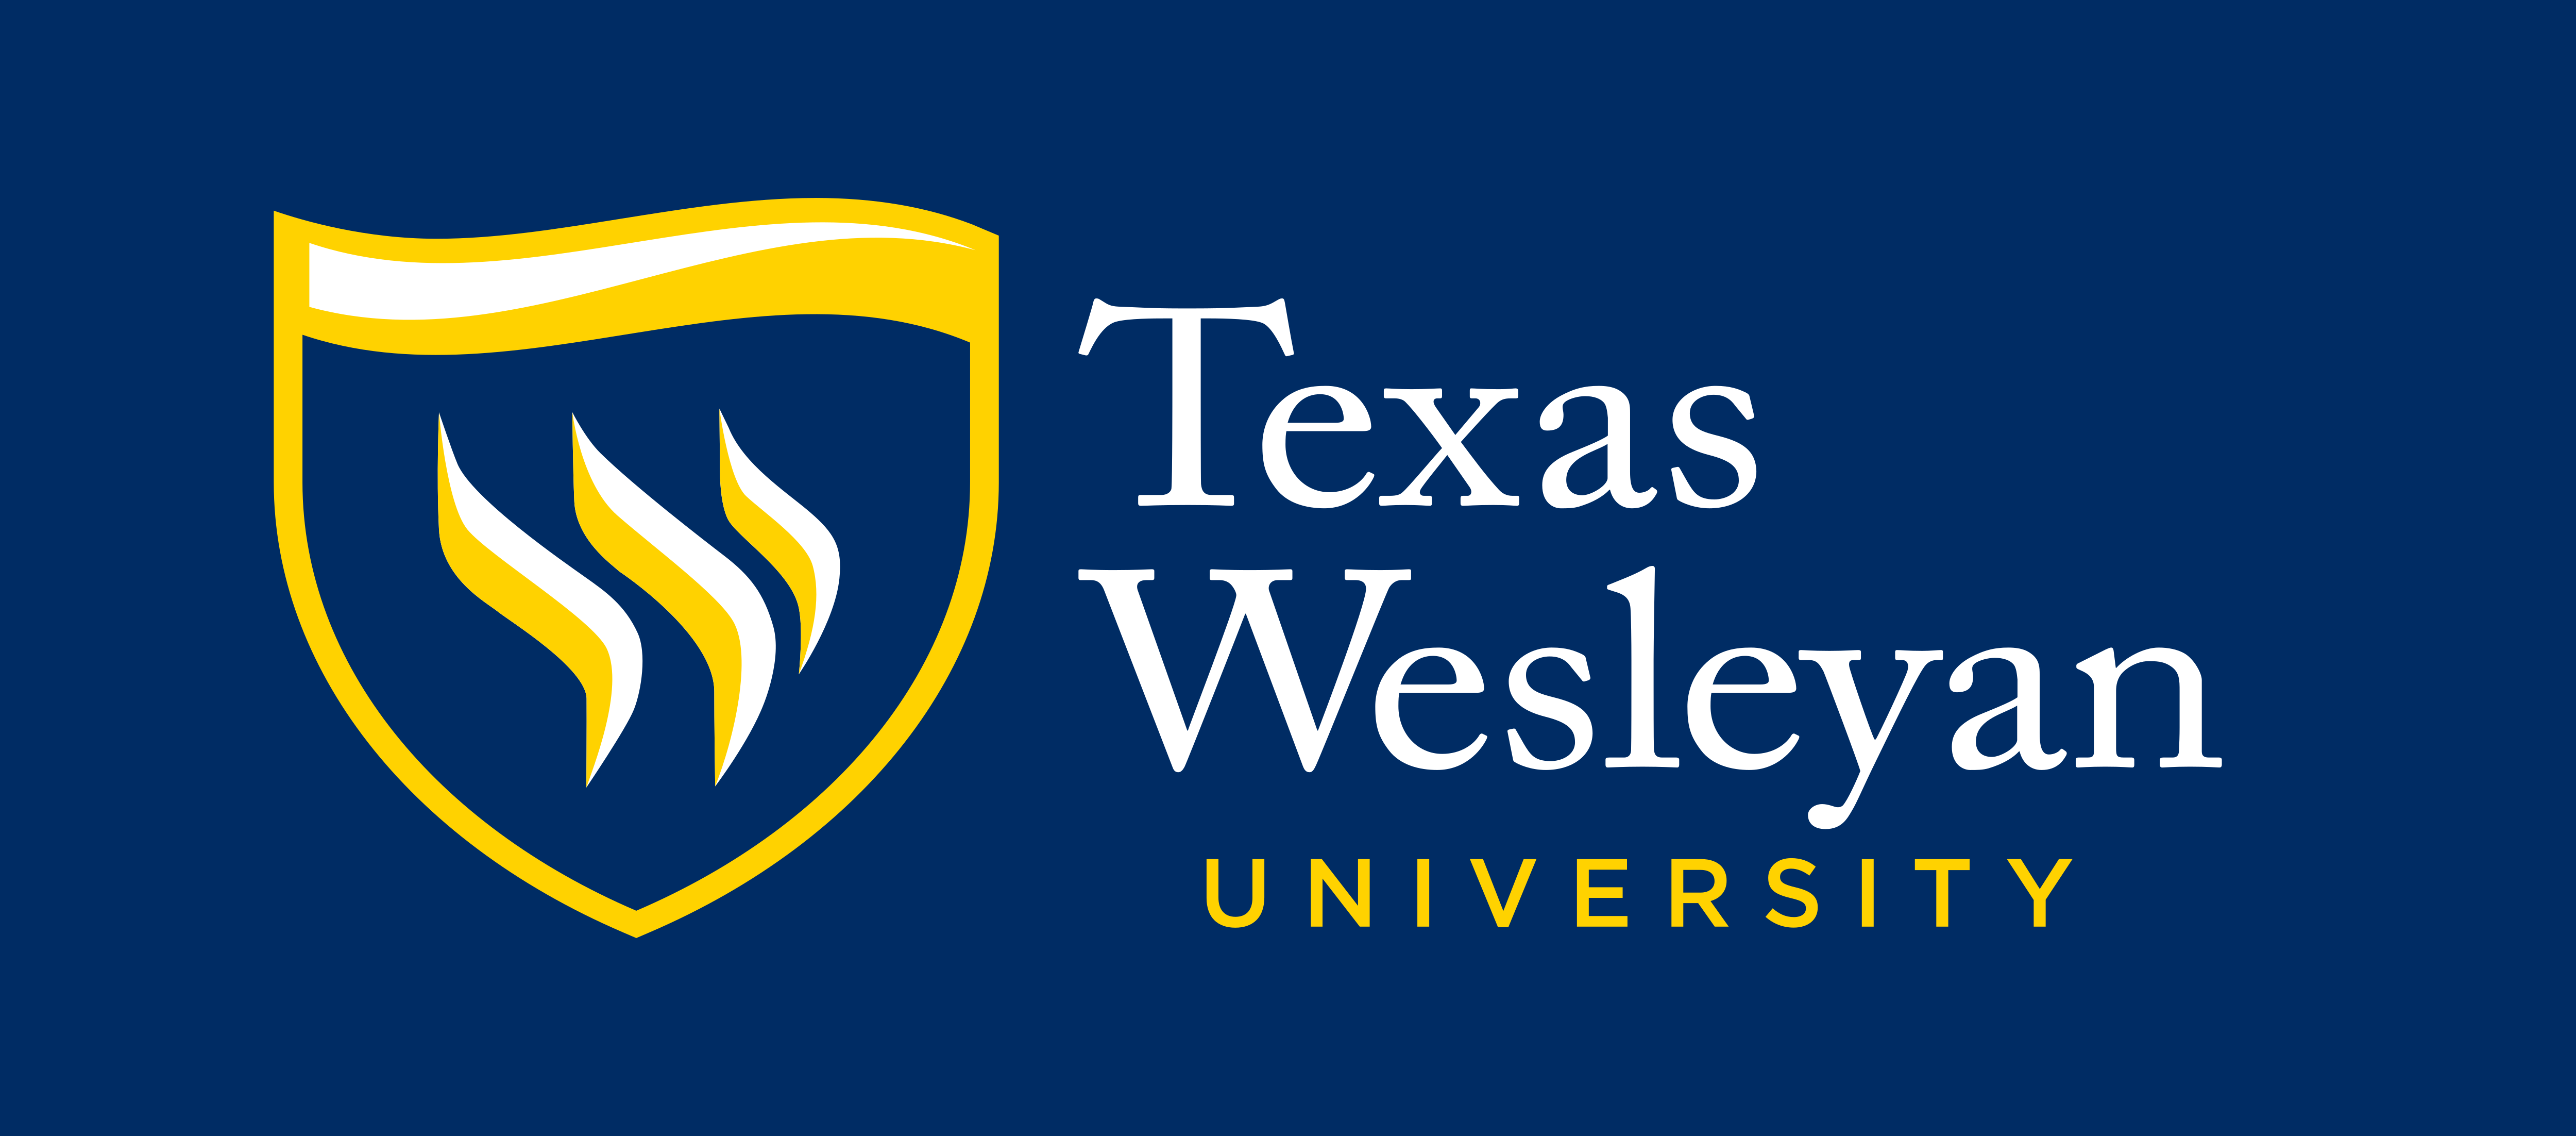 Texas Wesleyan University Logos Download